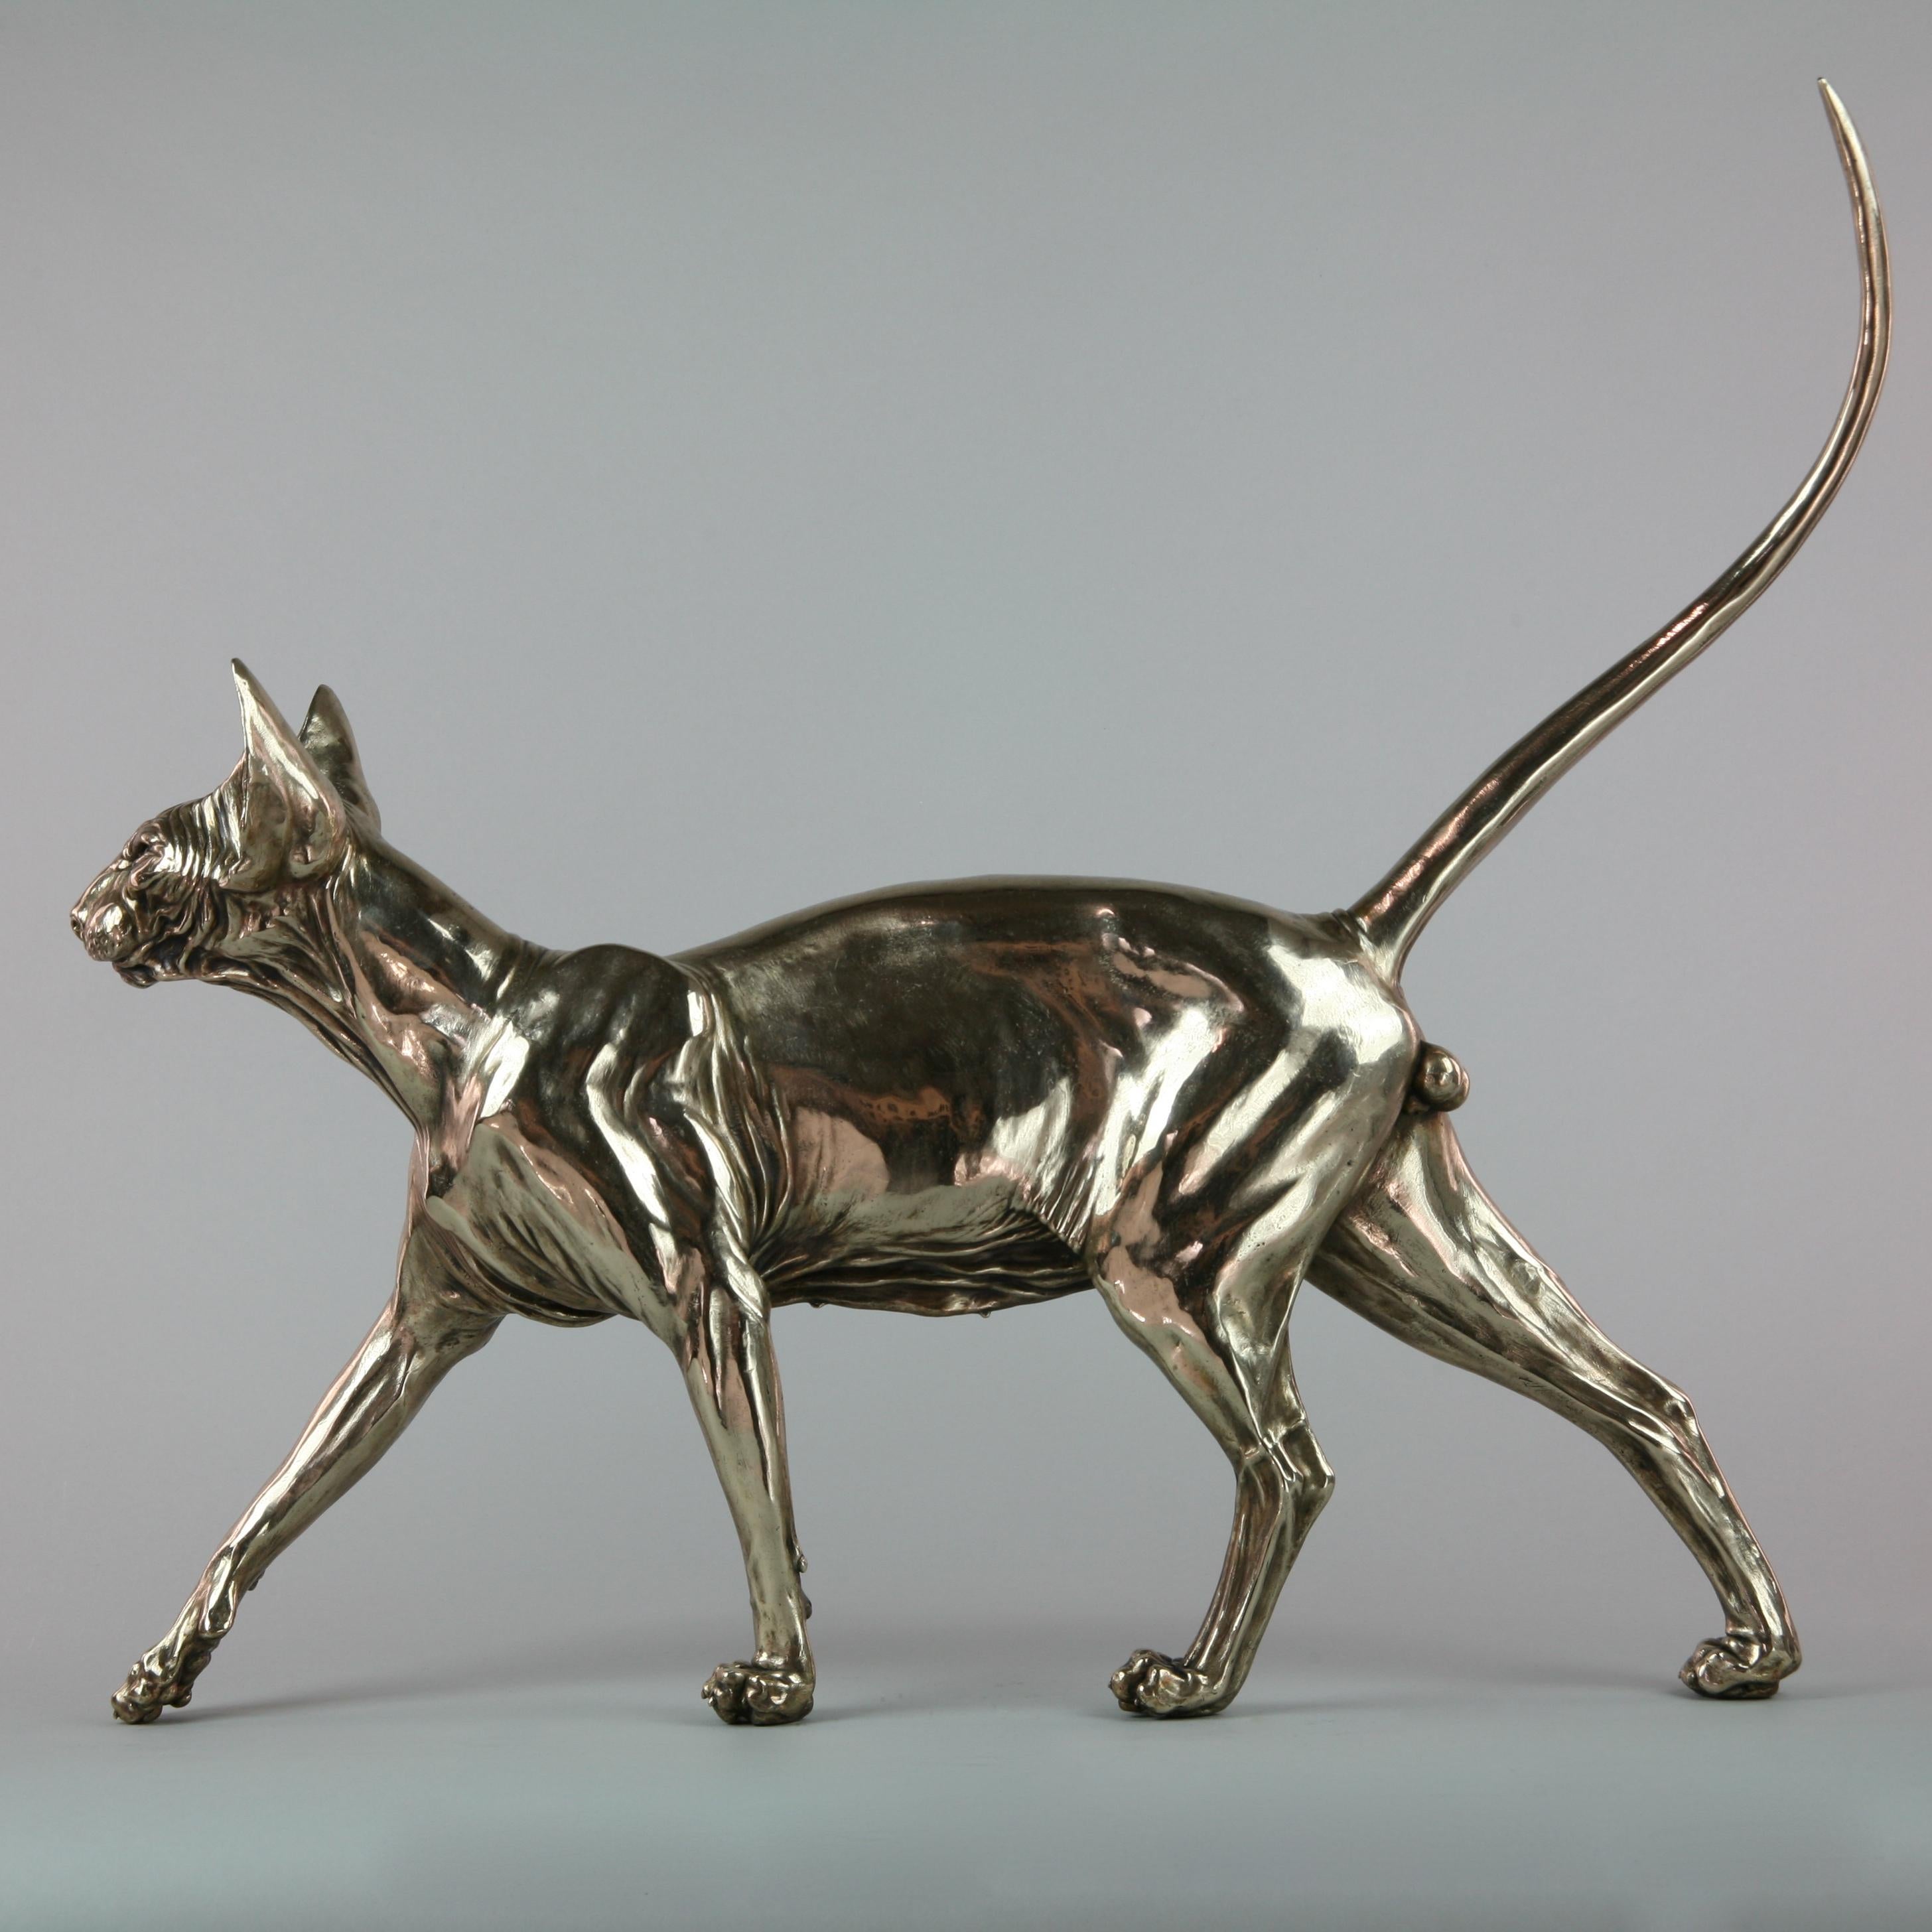 Sphynx Cat II - sculpture wildlife animal limited edition bronze modern marine - Abstract Impressionist Sculpture by Andrzej Szymczyk